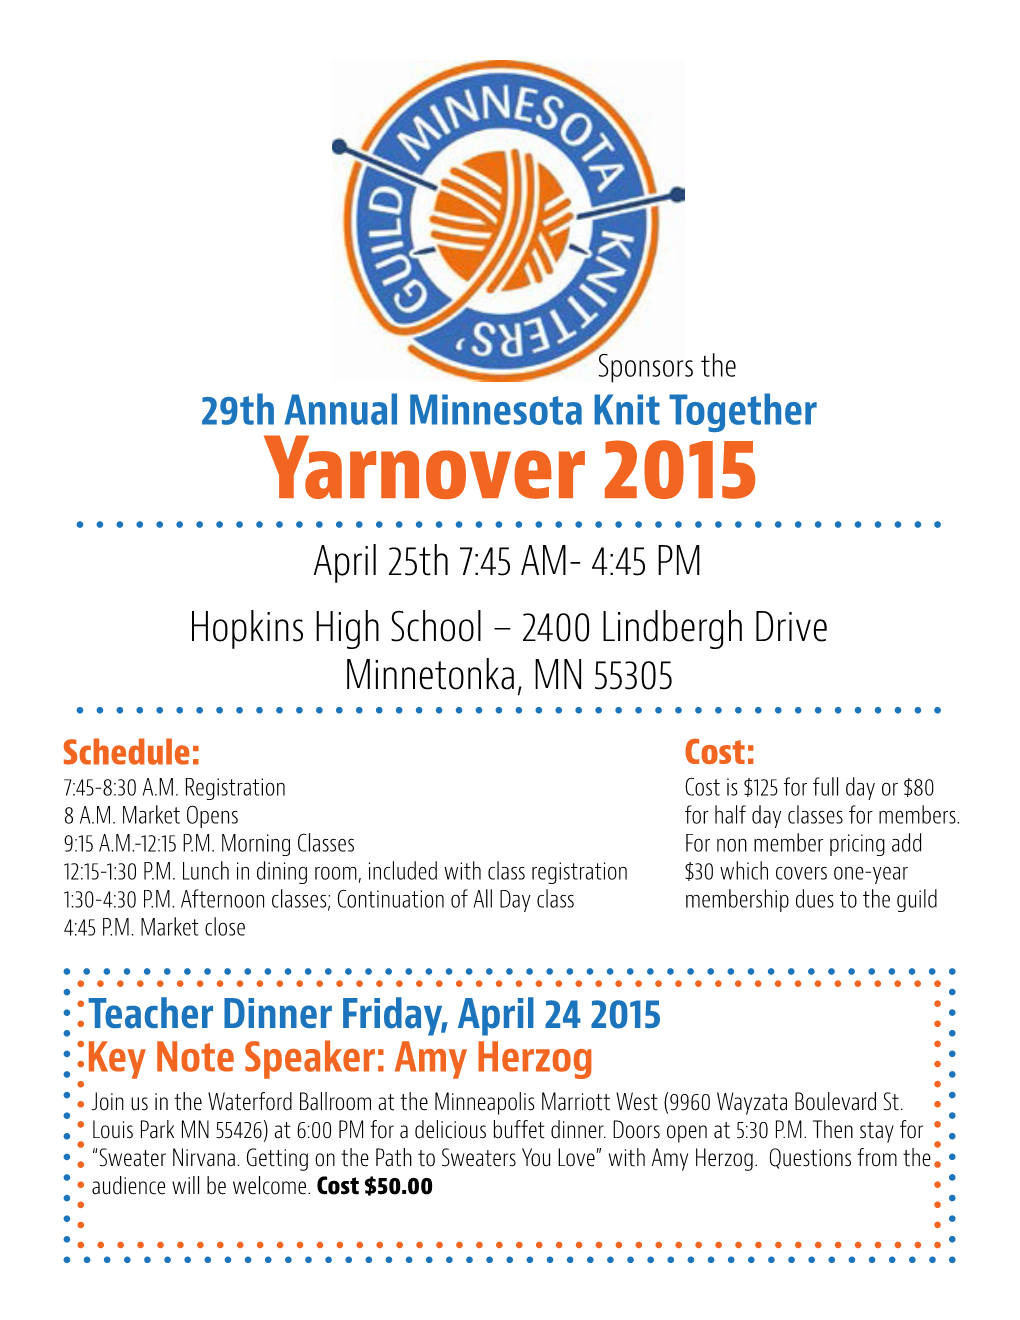 Yarnover 2015 Brochure